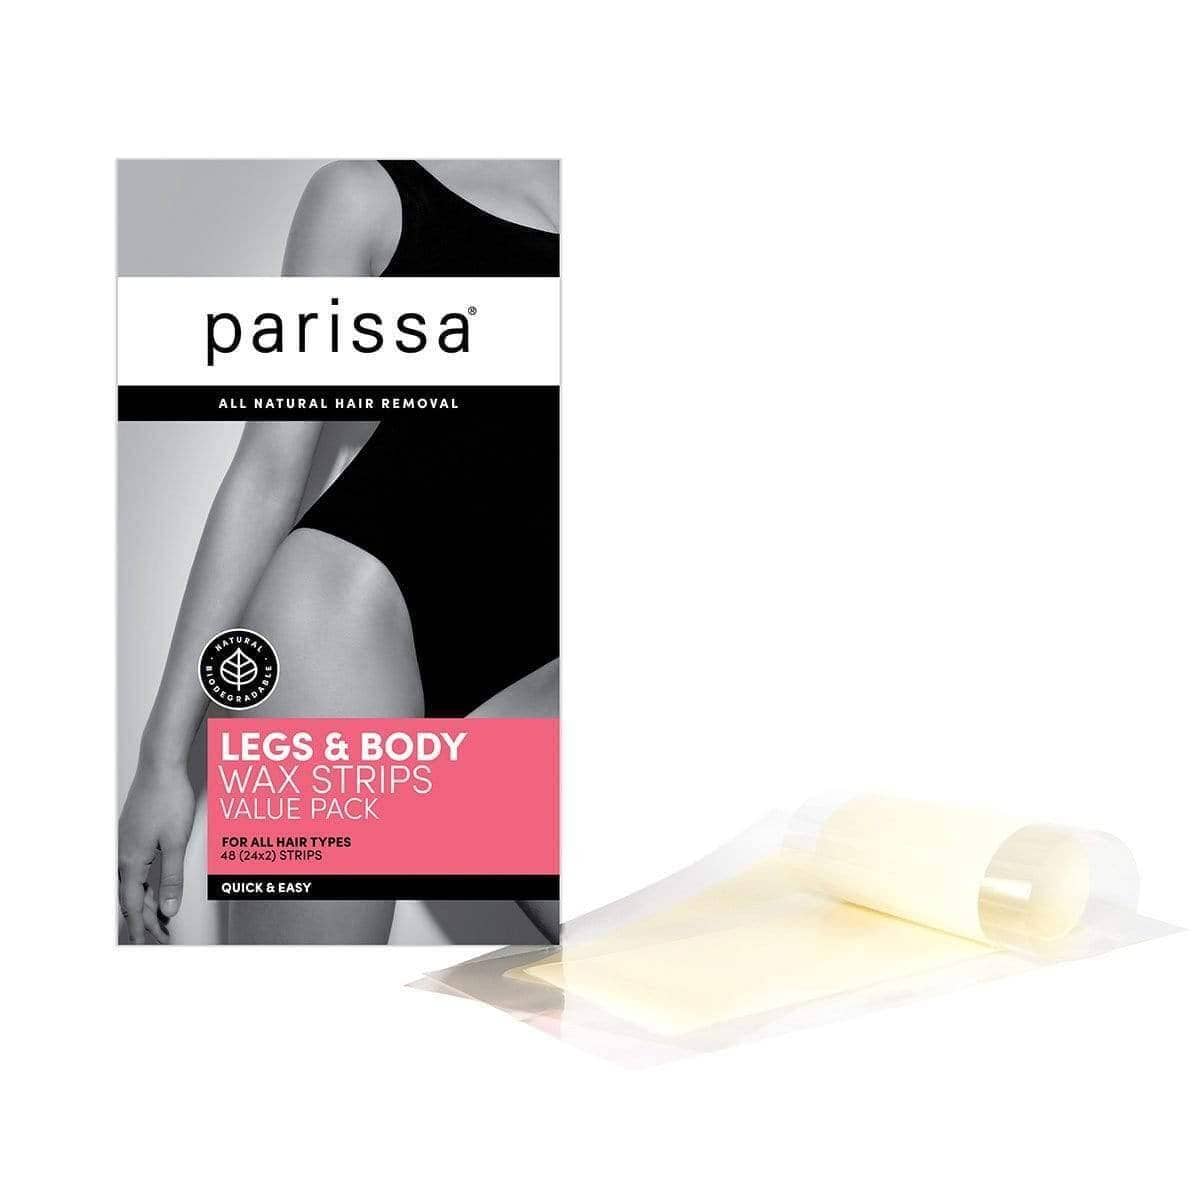 Legs & Body Wax Strips (Value Pack) Kits Parissa 